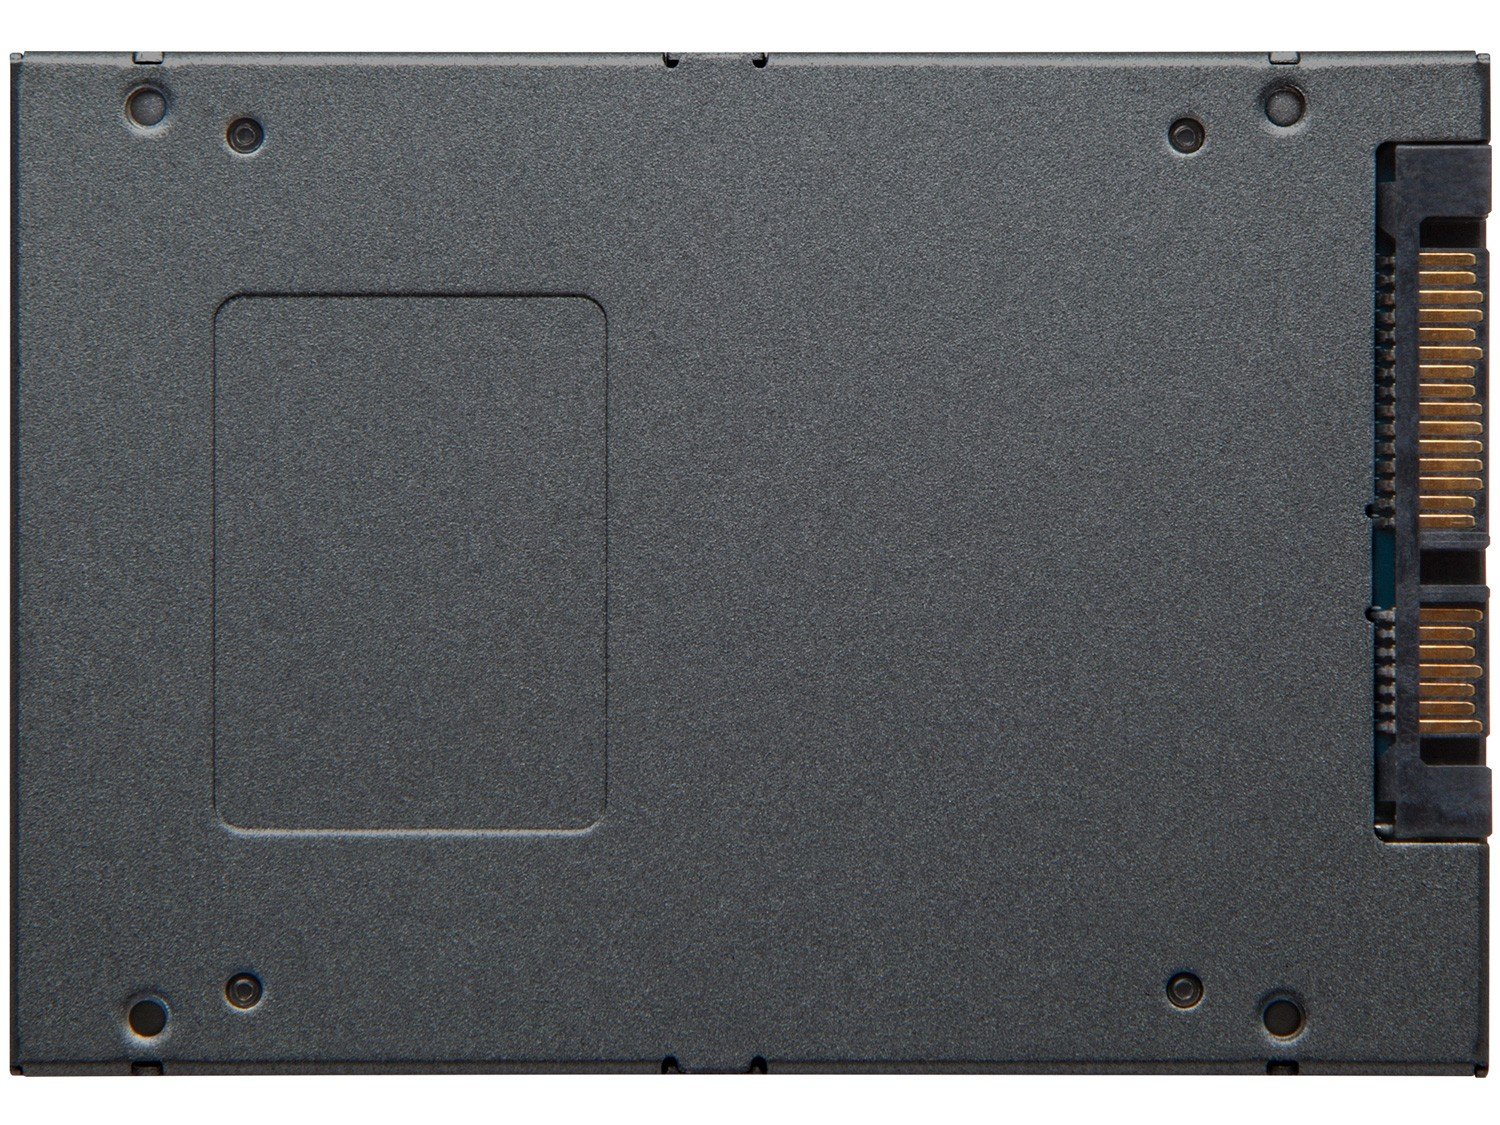 SSD 480GB Kingston Sata Rev. 3.0 - Leituras 500MB/s e Gravações 450MB/s A400 - 2